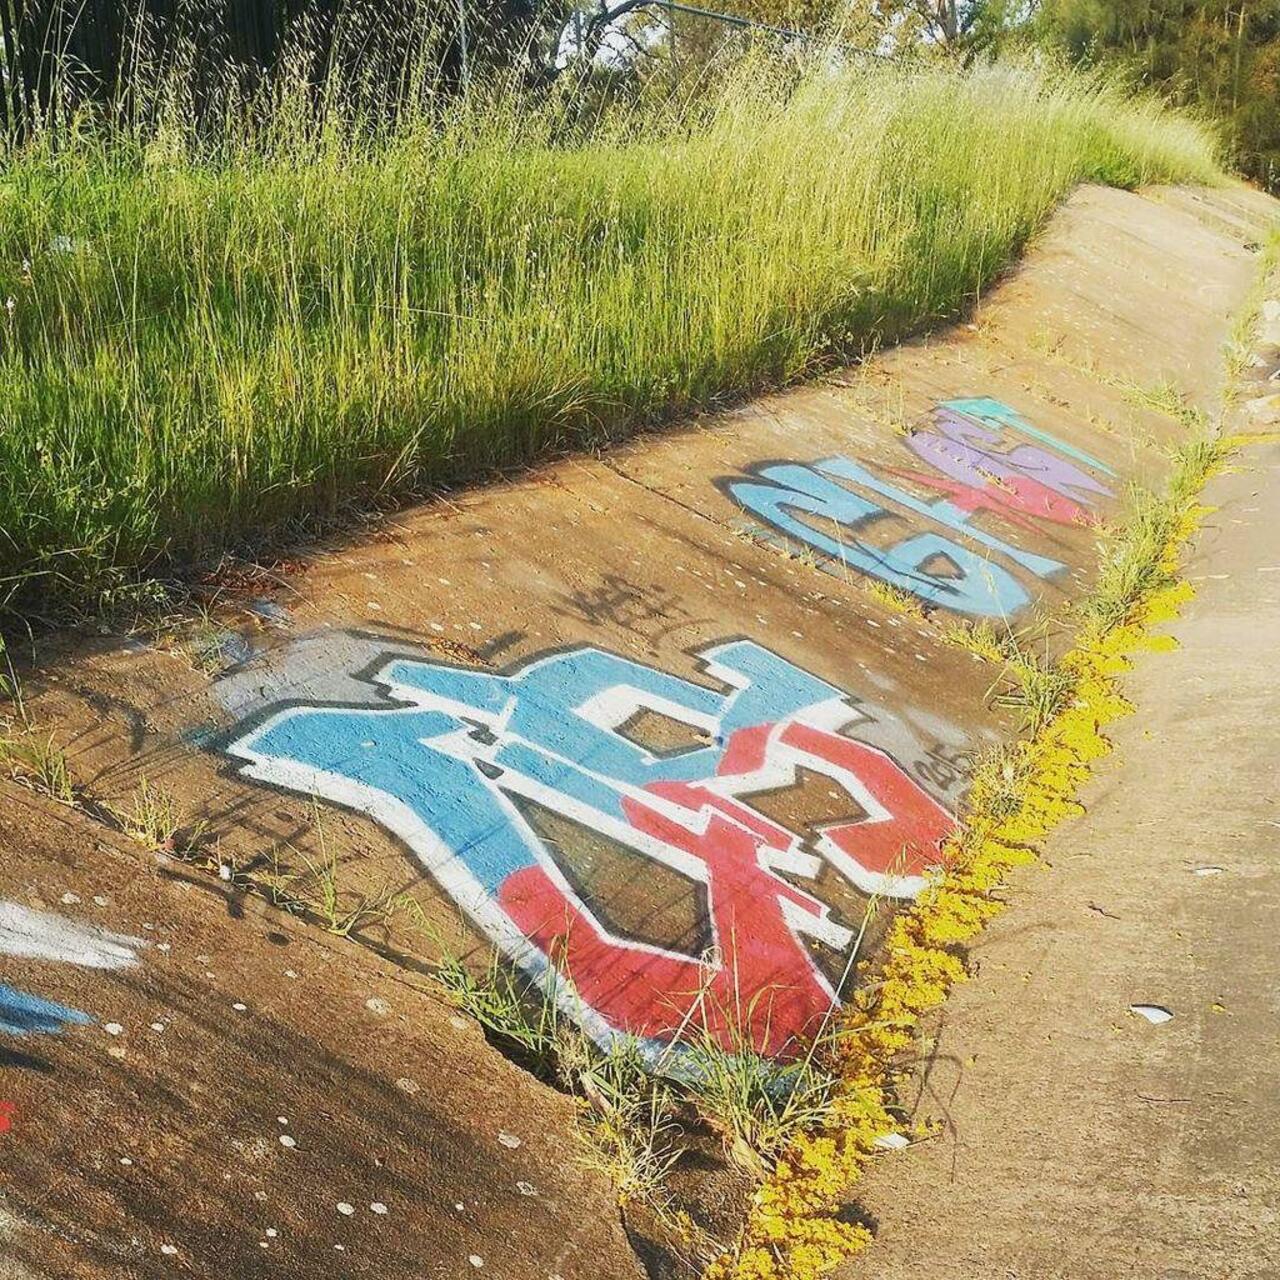 RT @artpushr: via #liddlechris "http://bit.ly/1jgqhb0" #graffiti #streetart http://t.co/JVpQY4iemZ